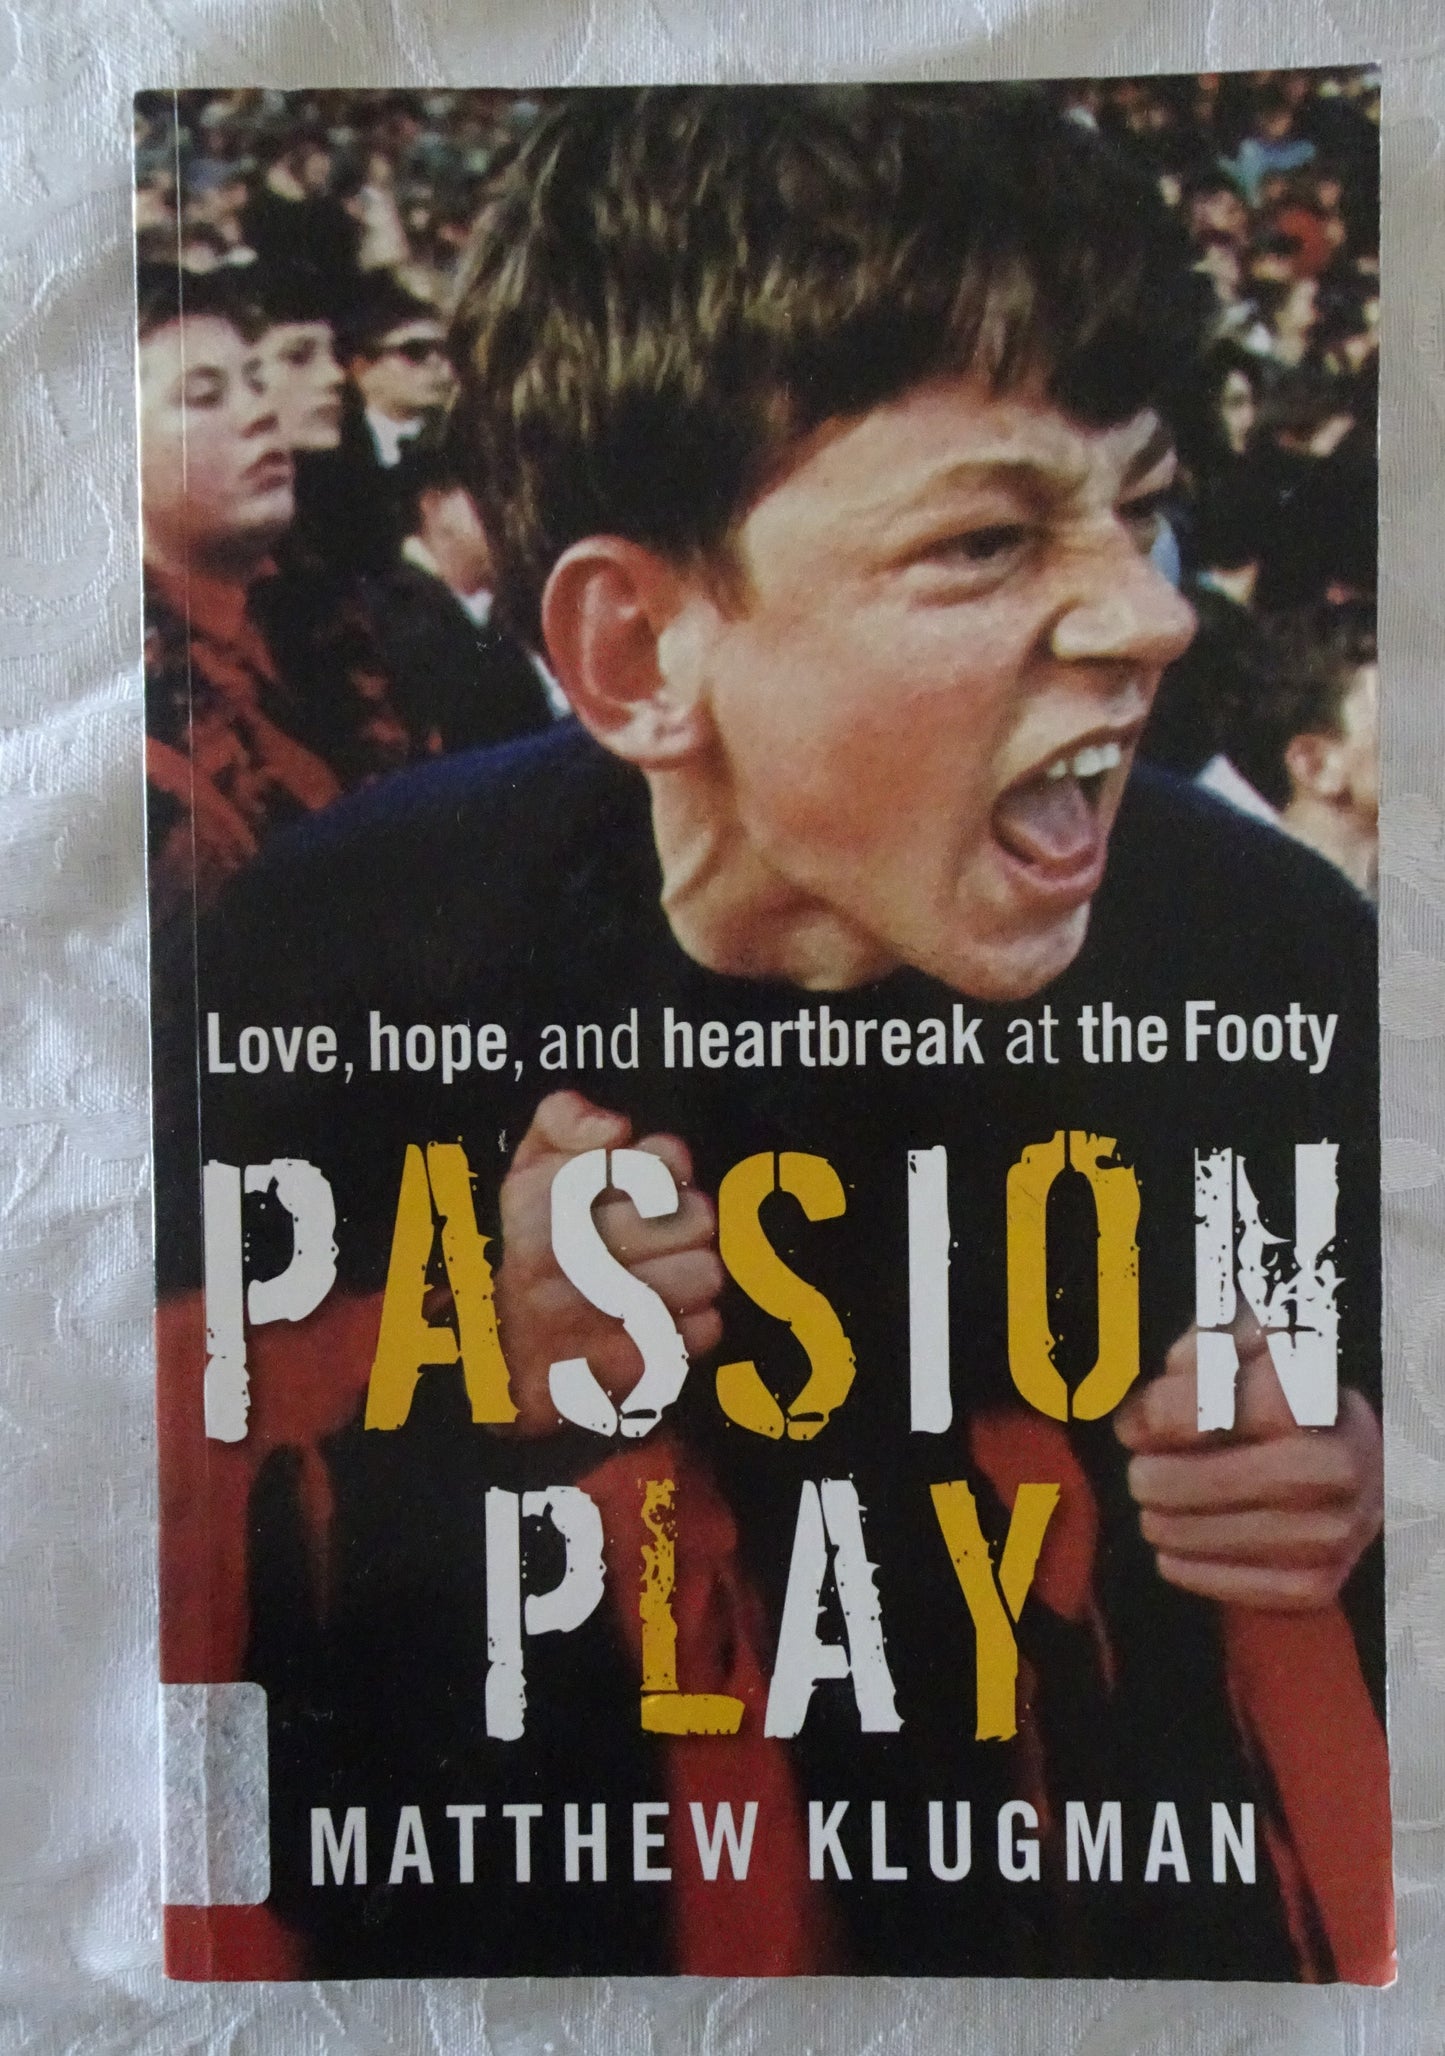 Passion Play by Matthew Klugman